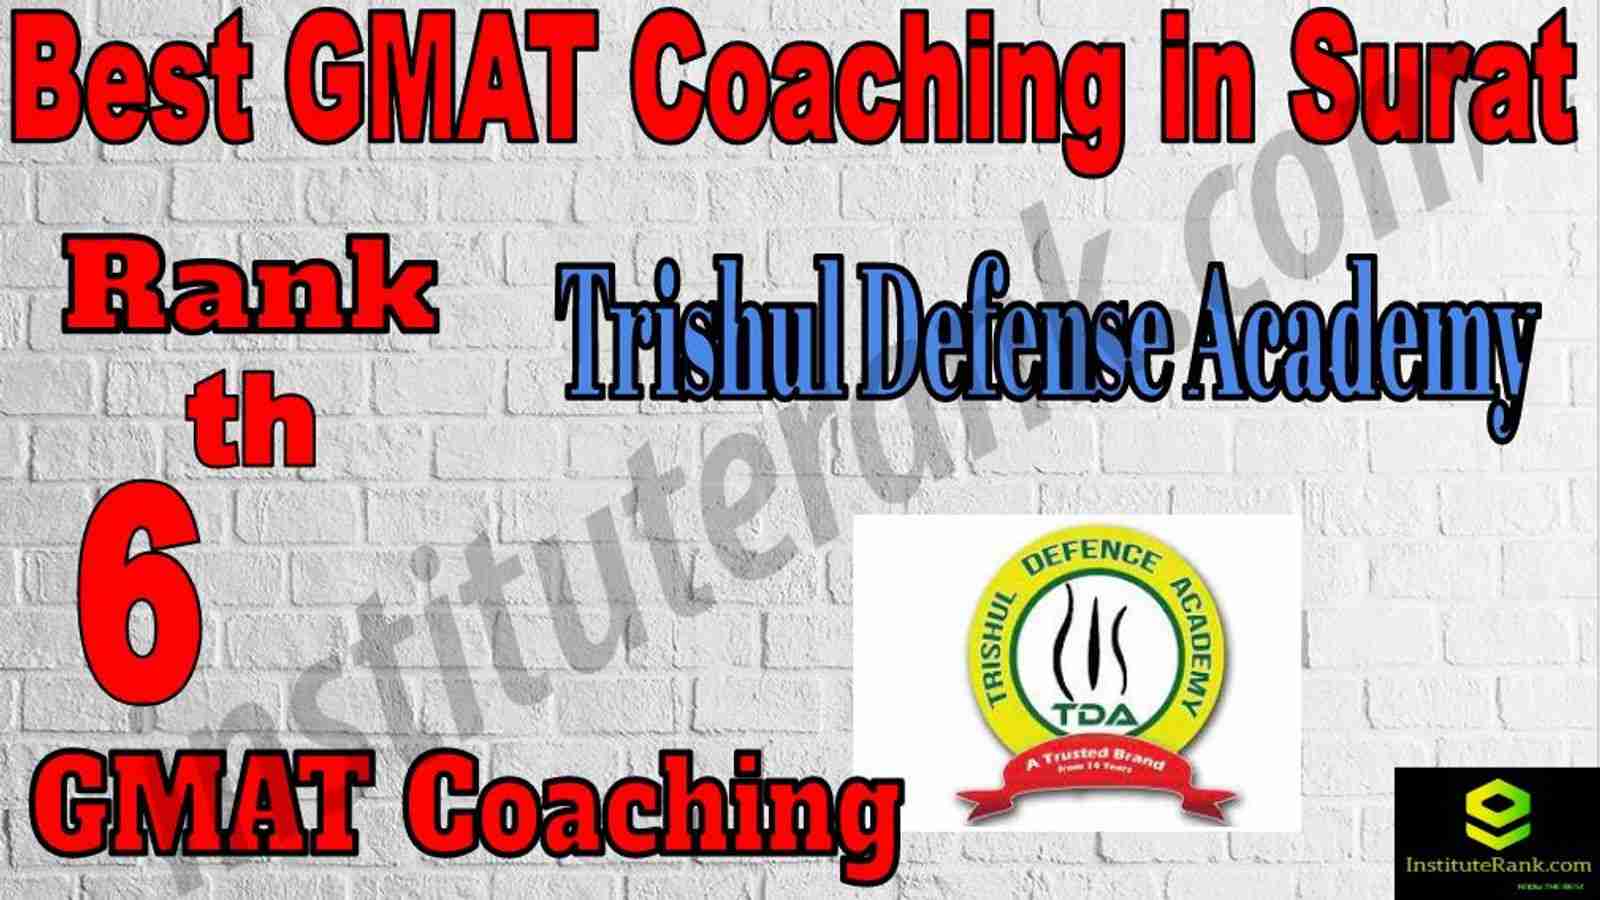 6th Best GMAT Coaching in Surat